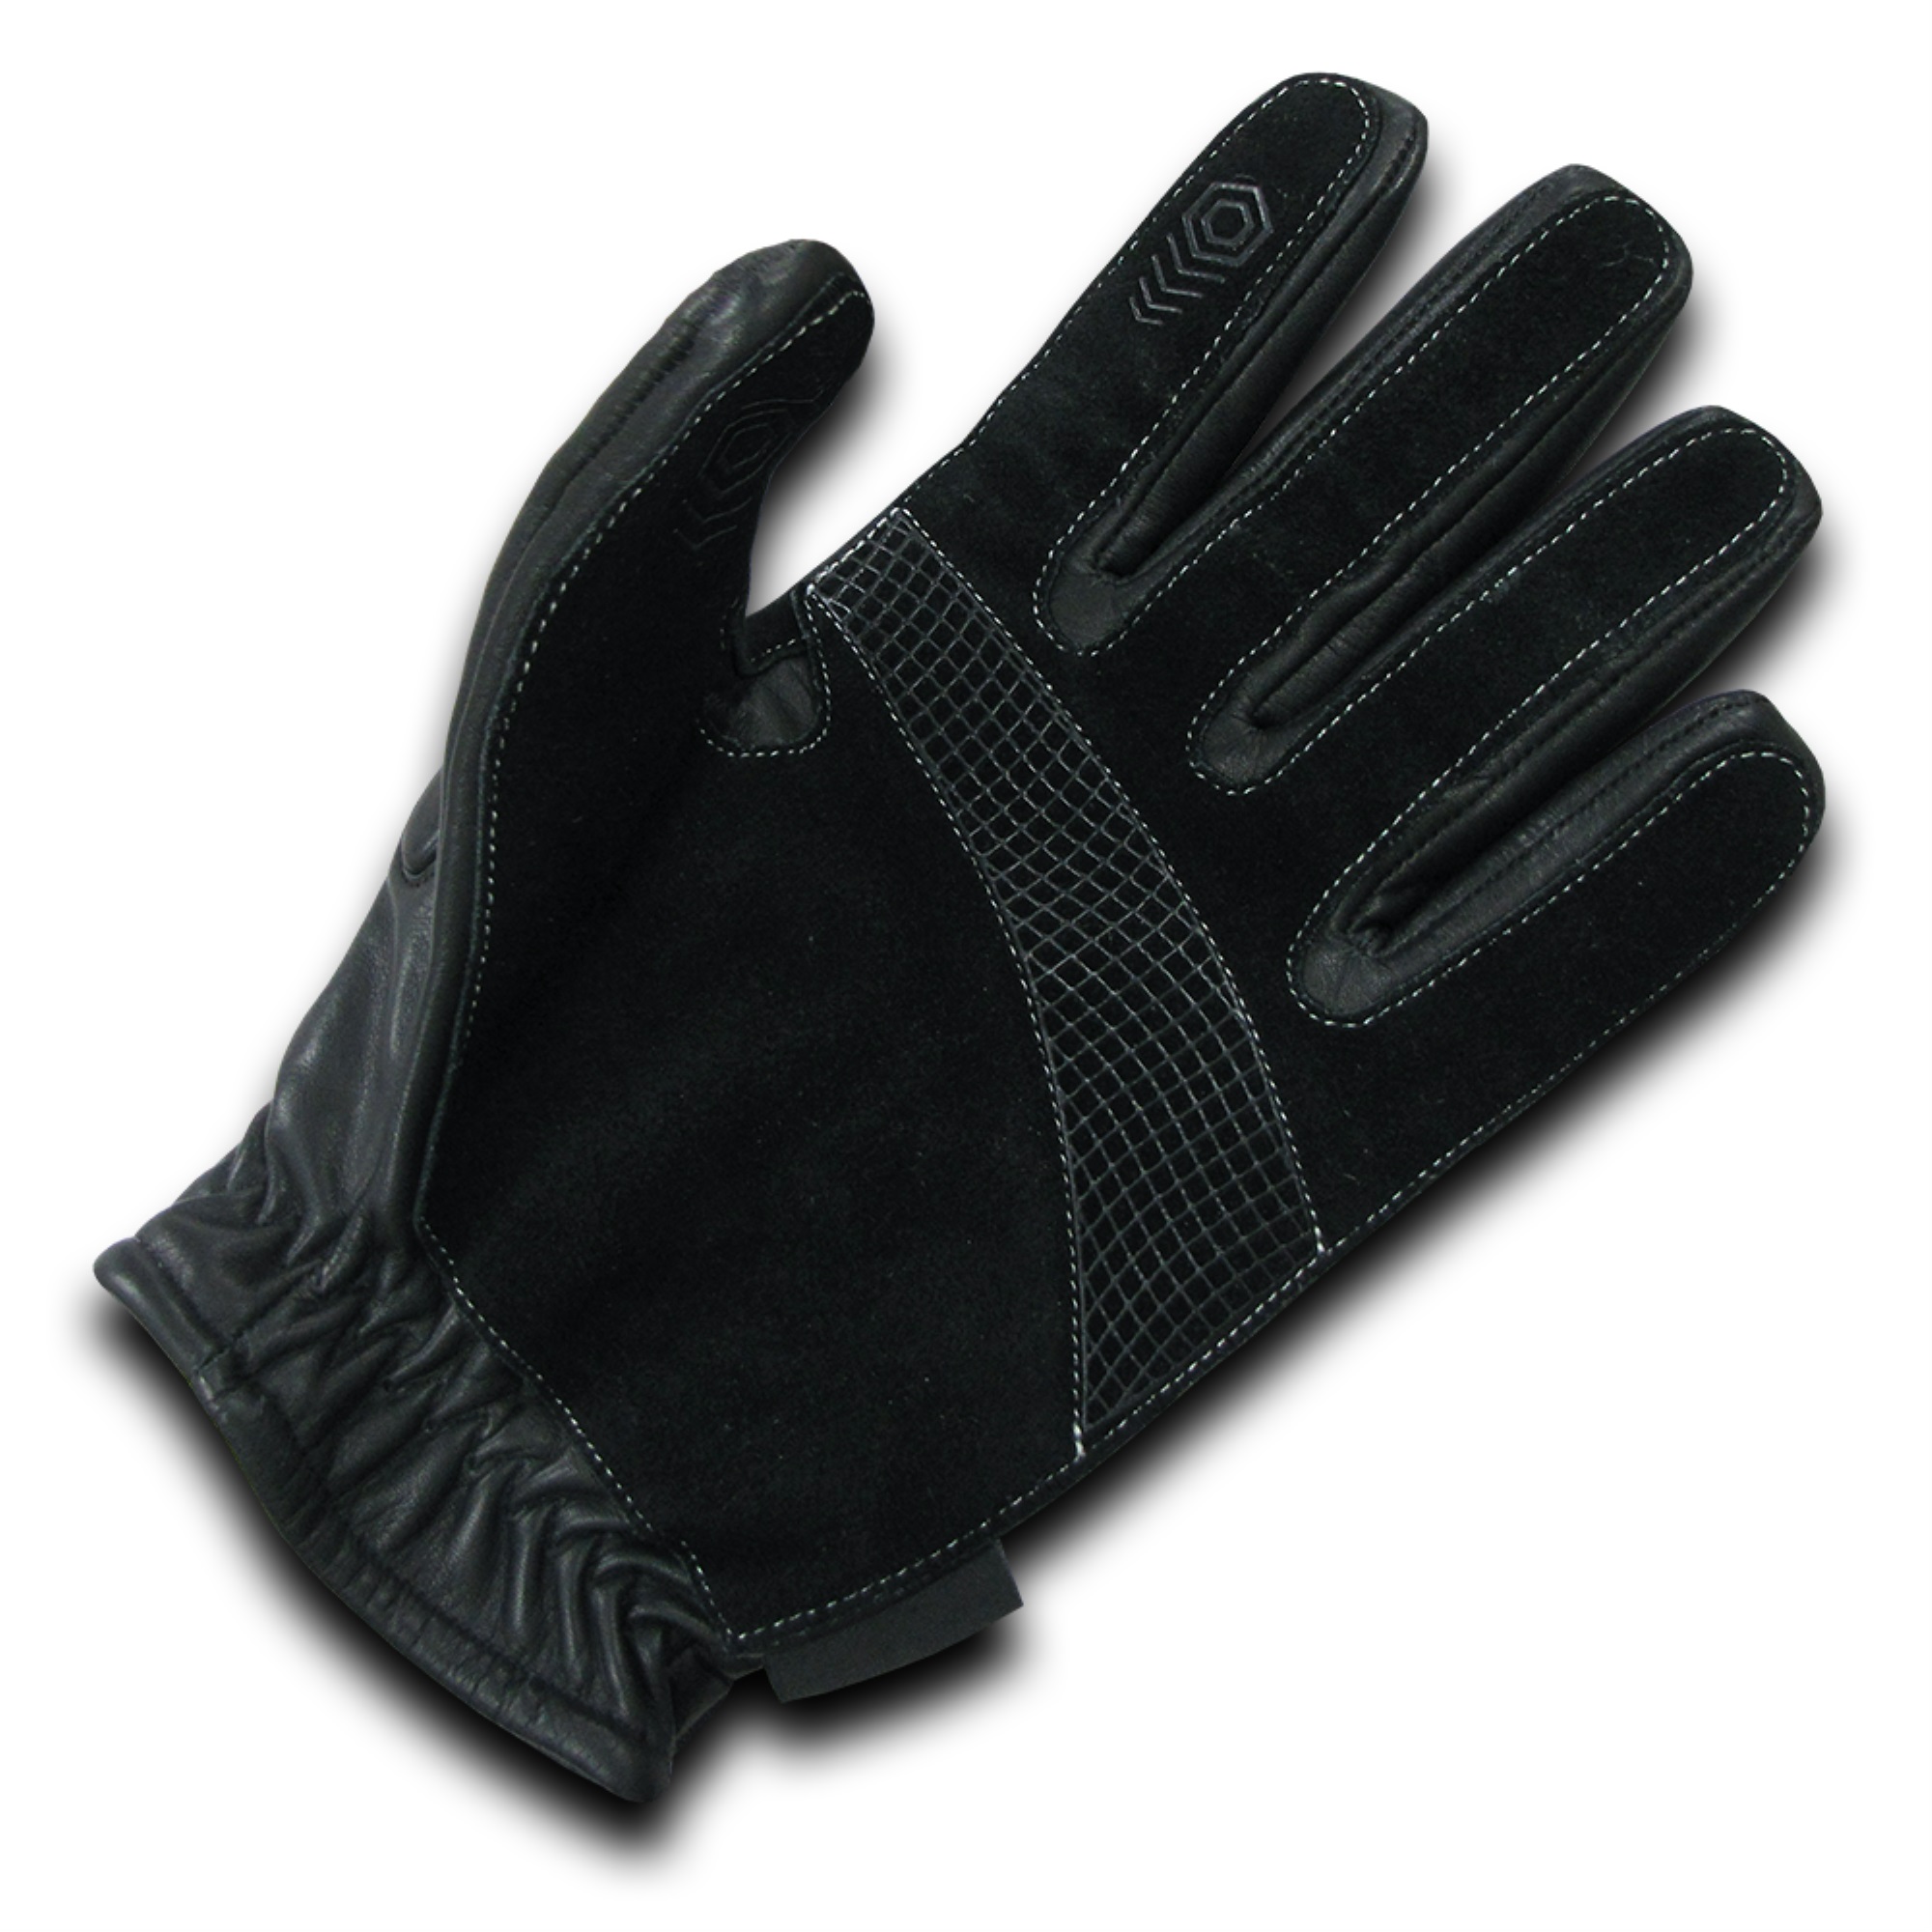 Rapid Dominance Heavy Duty Tactical Glove, Black, M